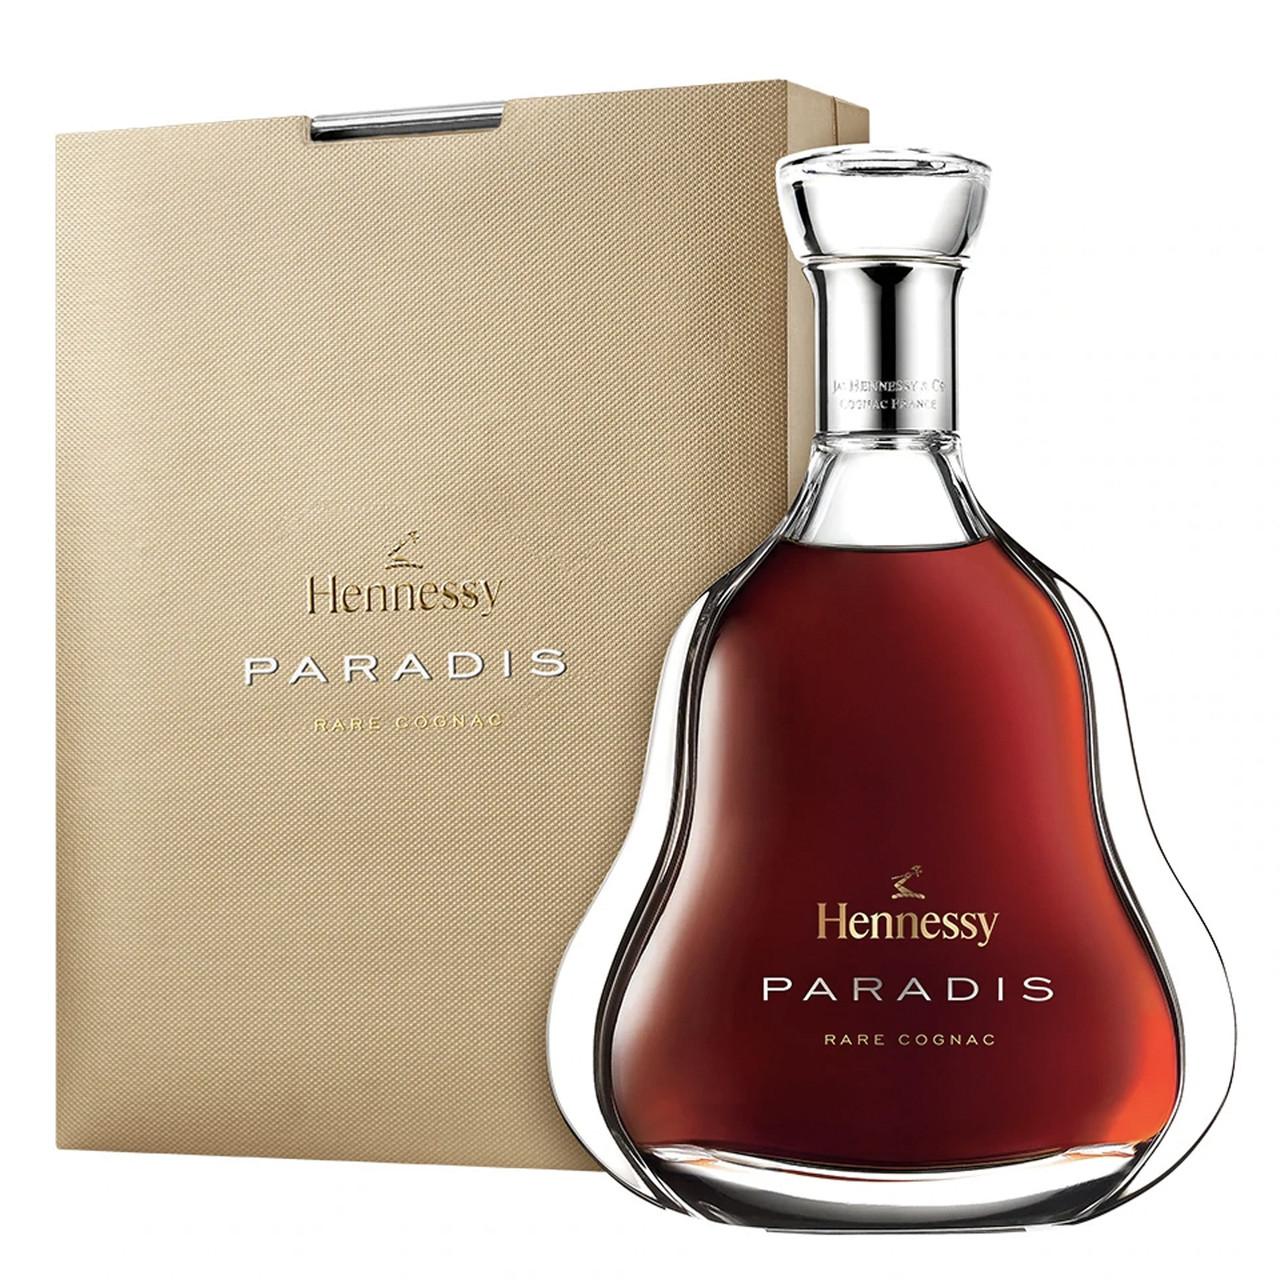 Hennessy Privilege VSOP Cognac 375mL